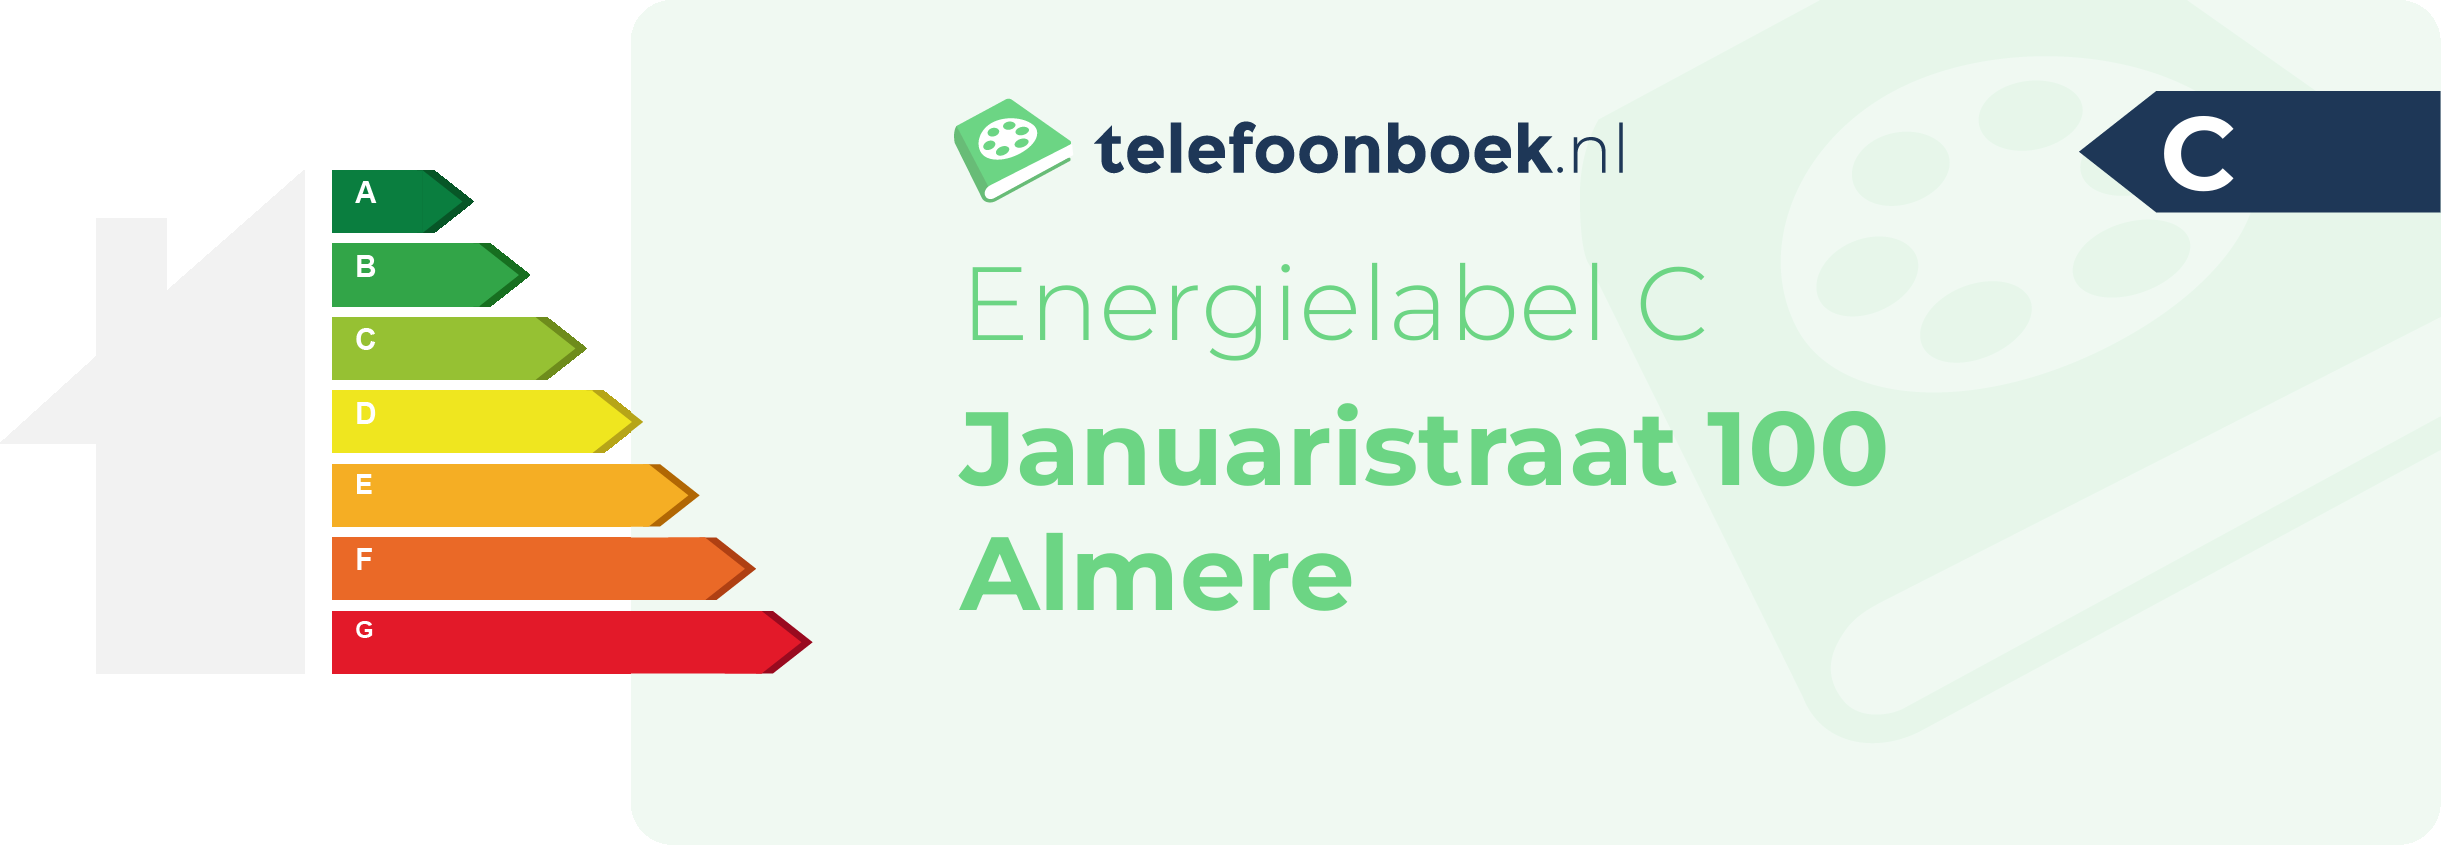 Energielabel Januaristraat 100 Almere